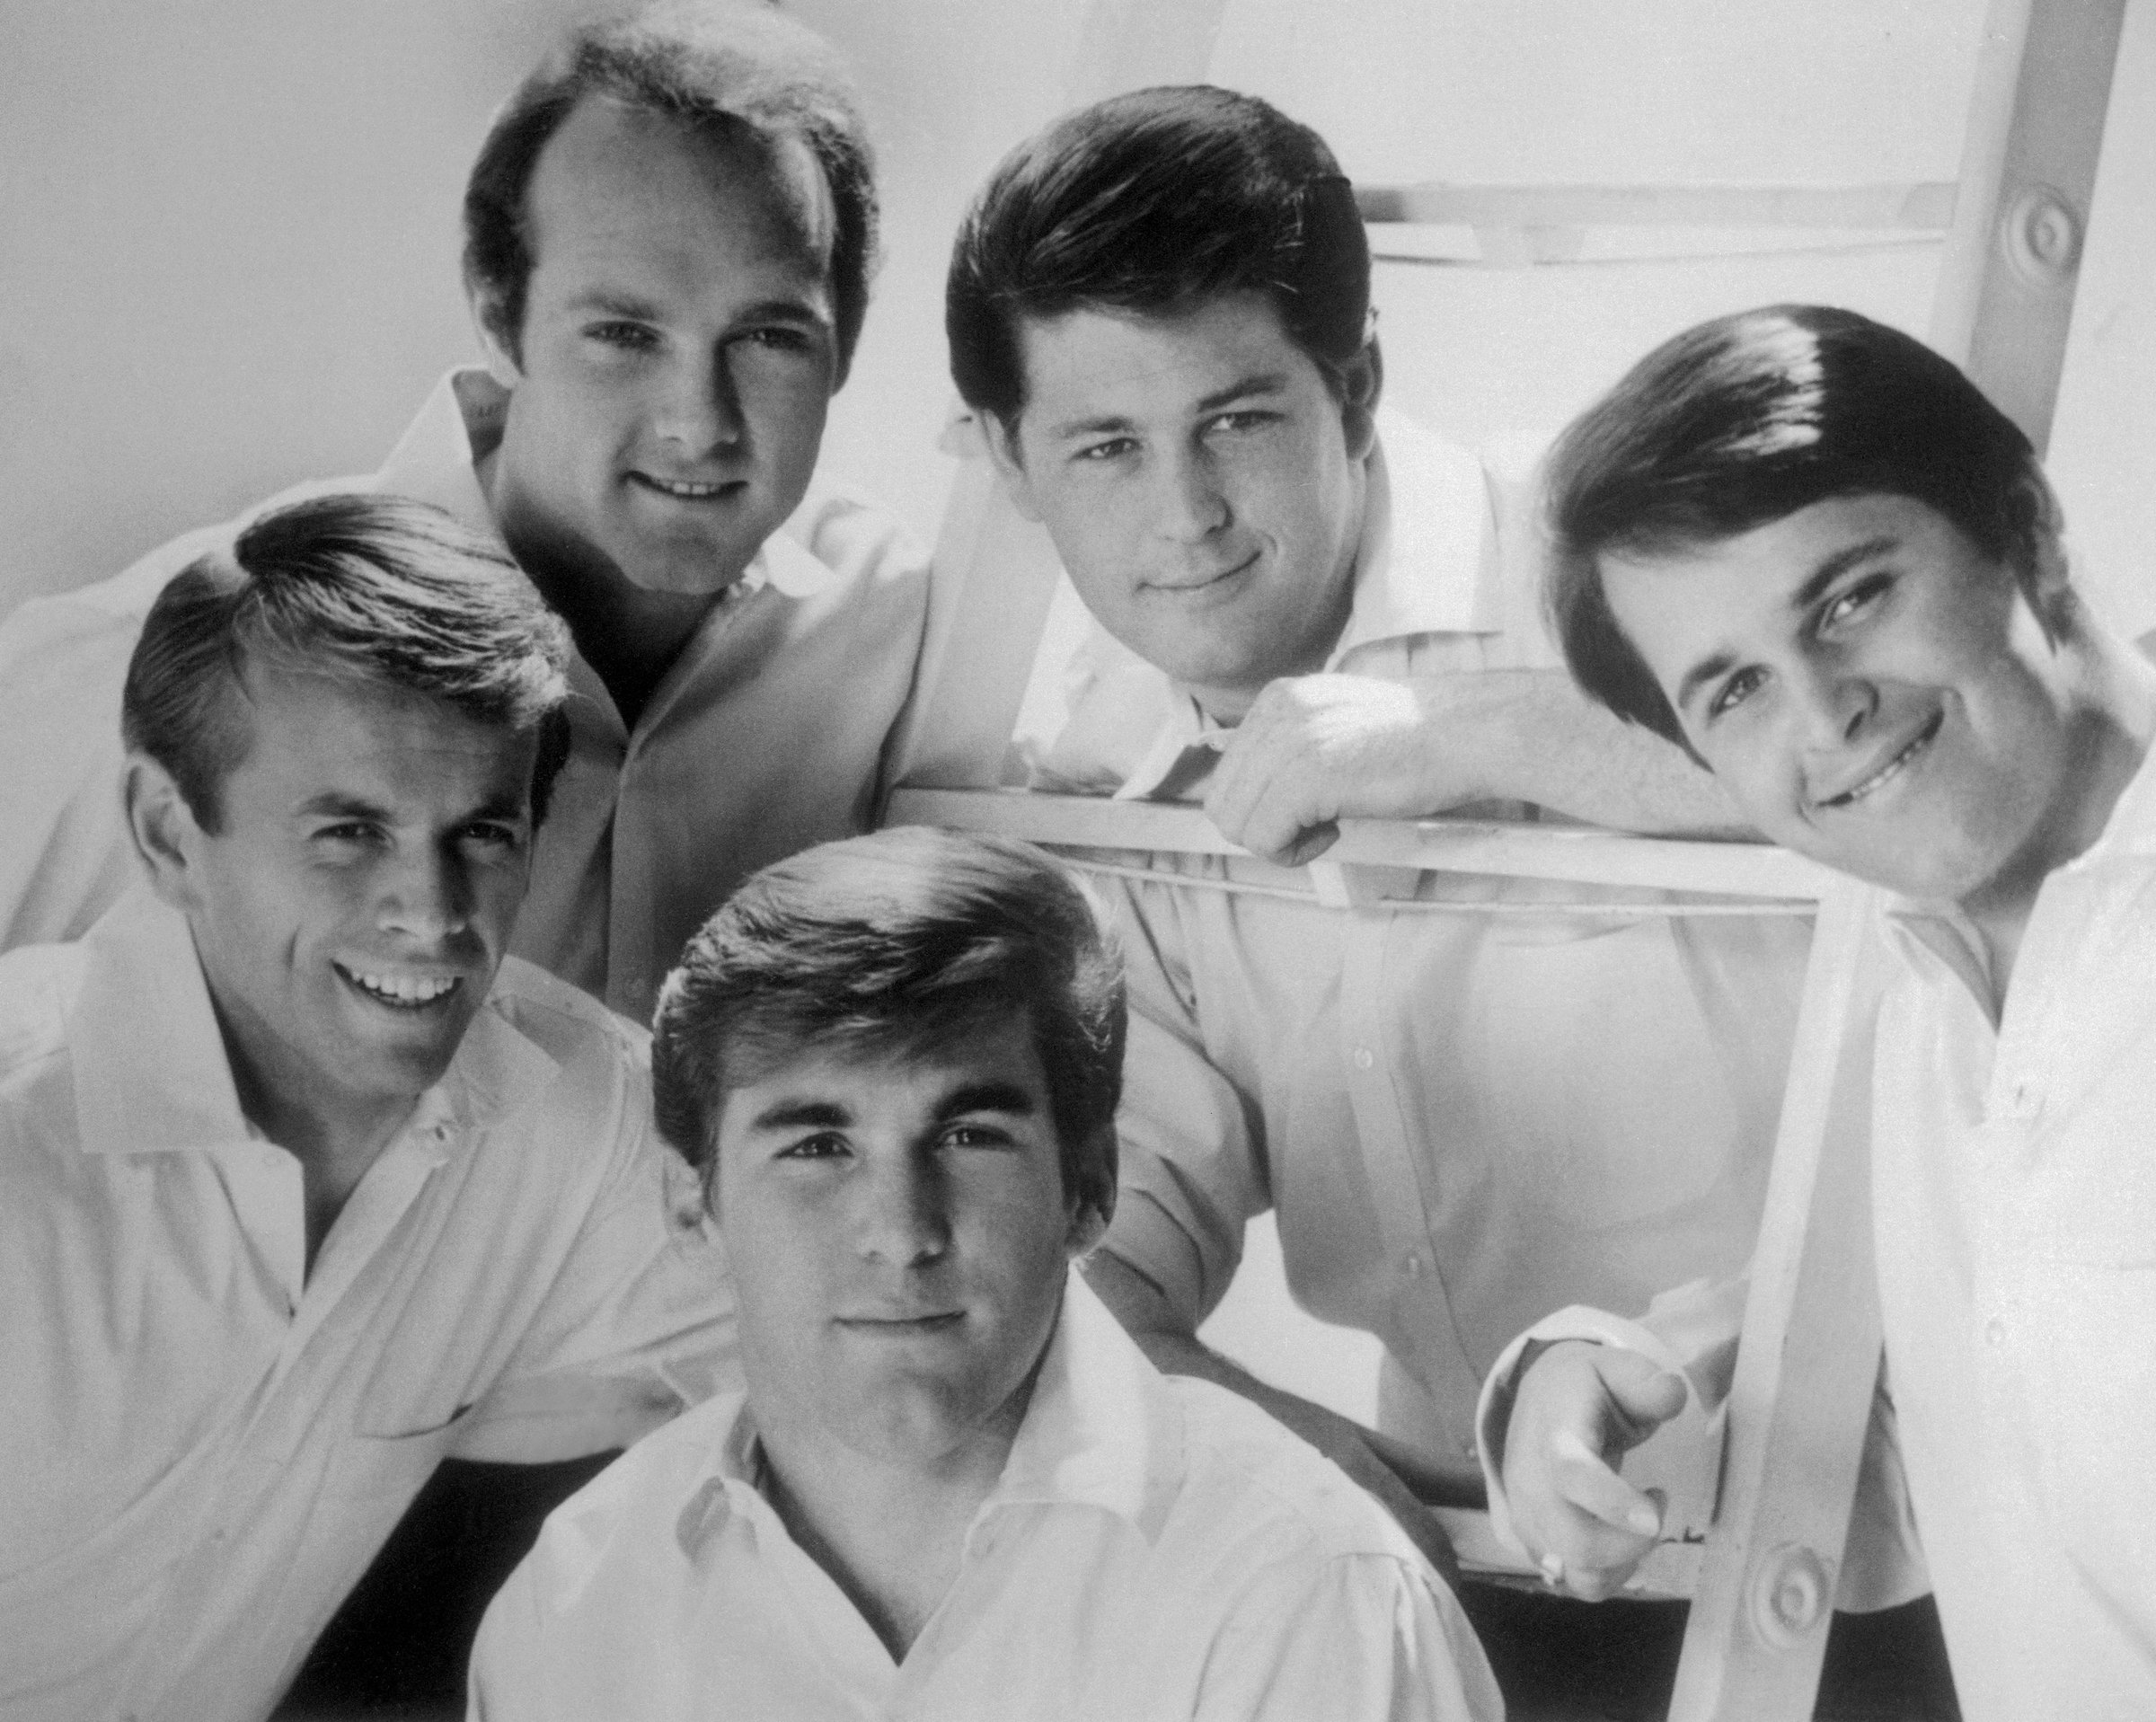 The Beach Boys are Al Jardine, Mike Love, Brian Wilson, Dennis Wilson, and Carl Wilson